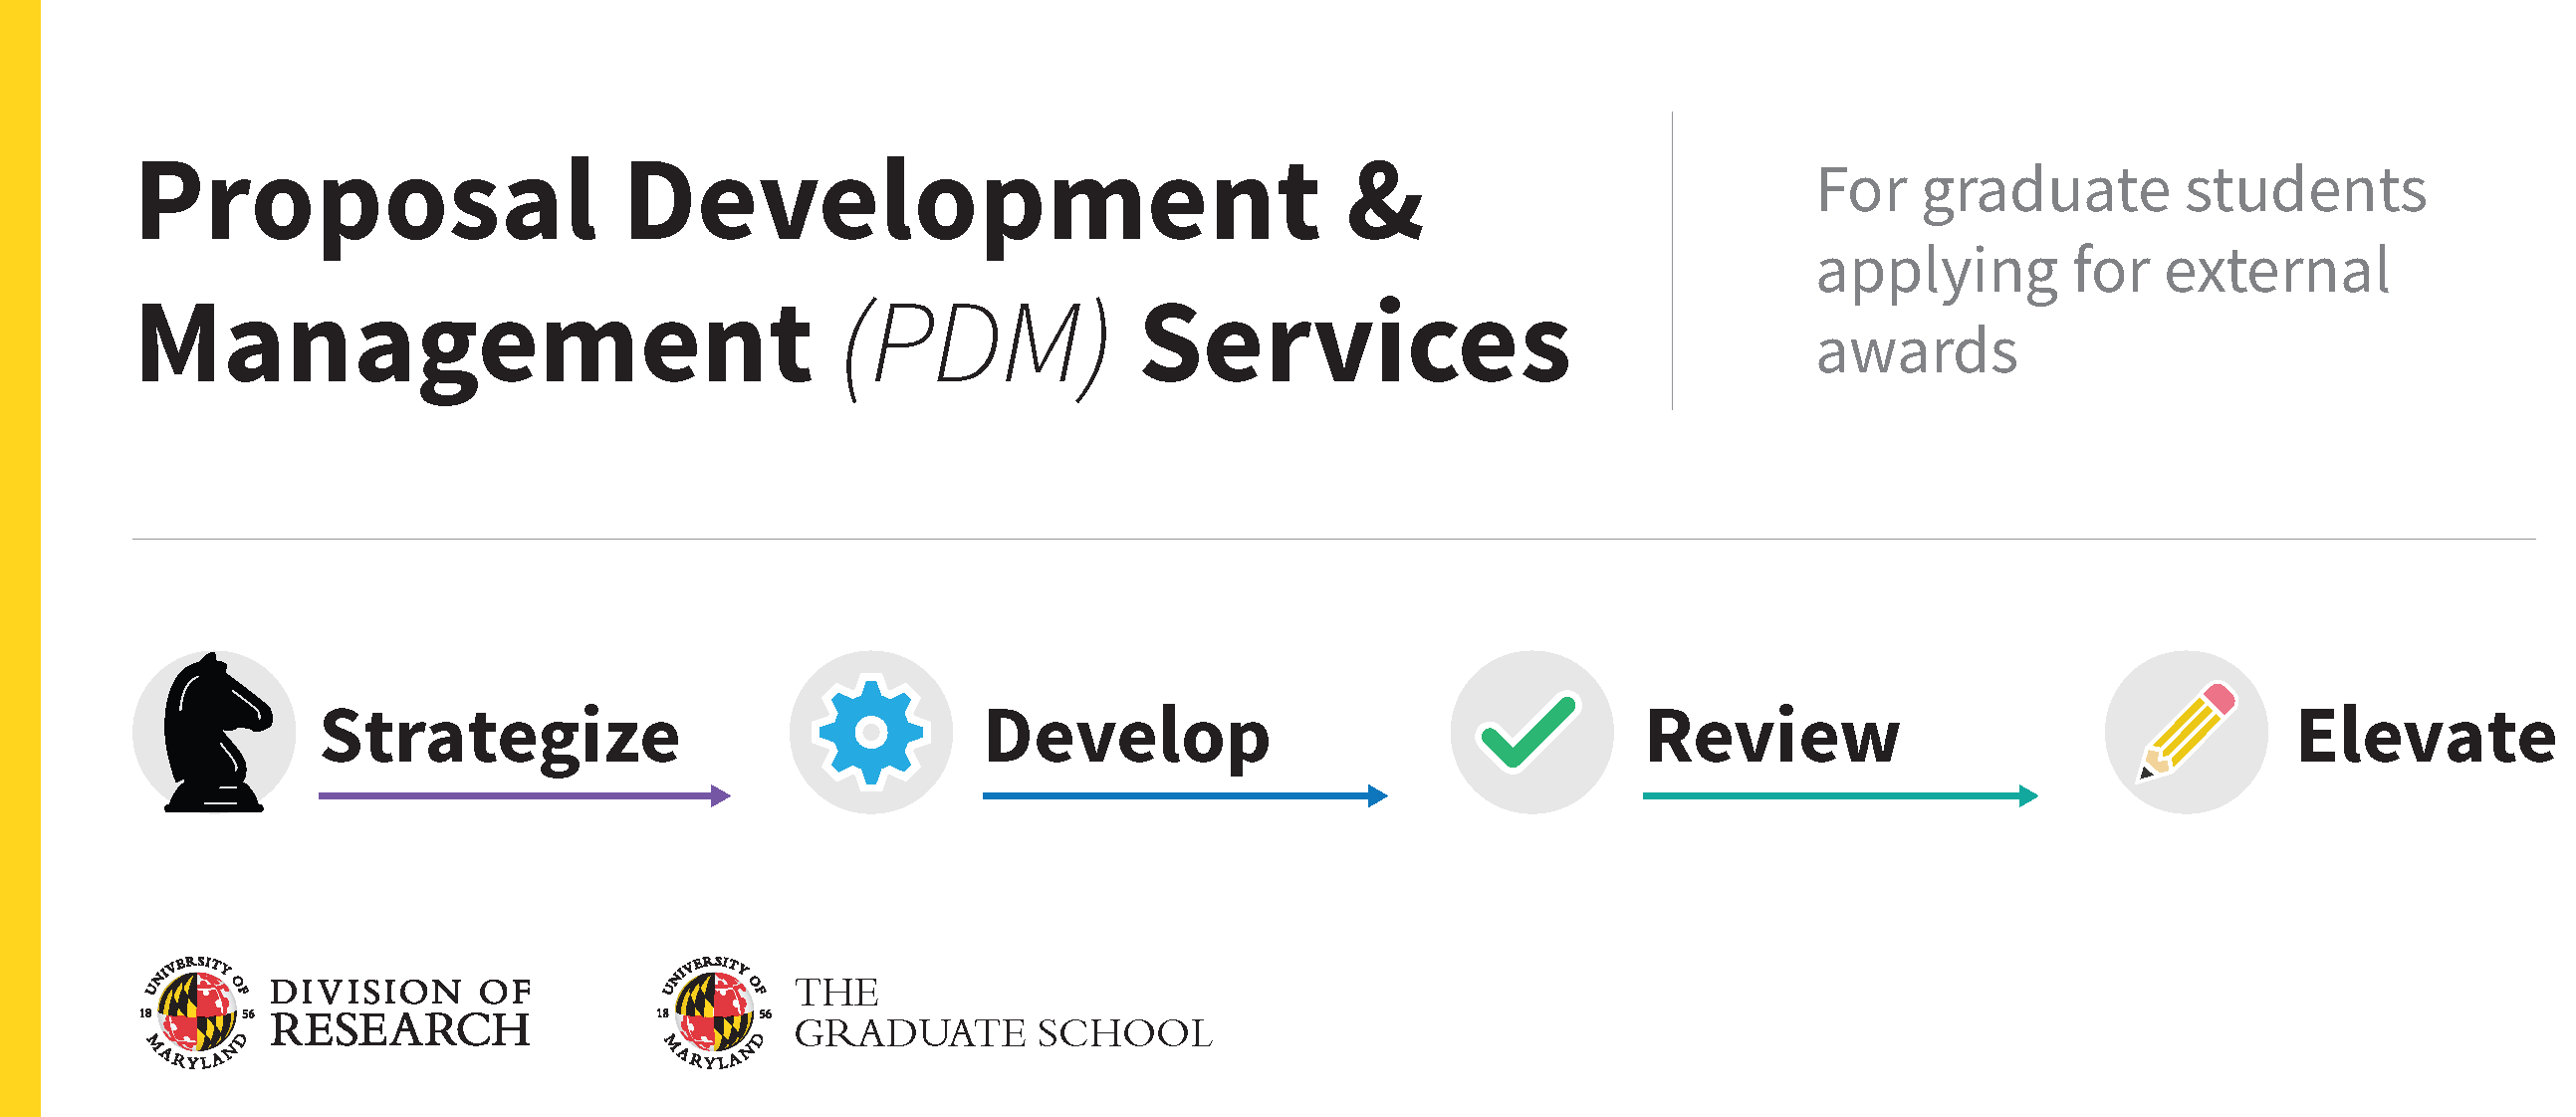 Proposal Development Services for Graduate Students